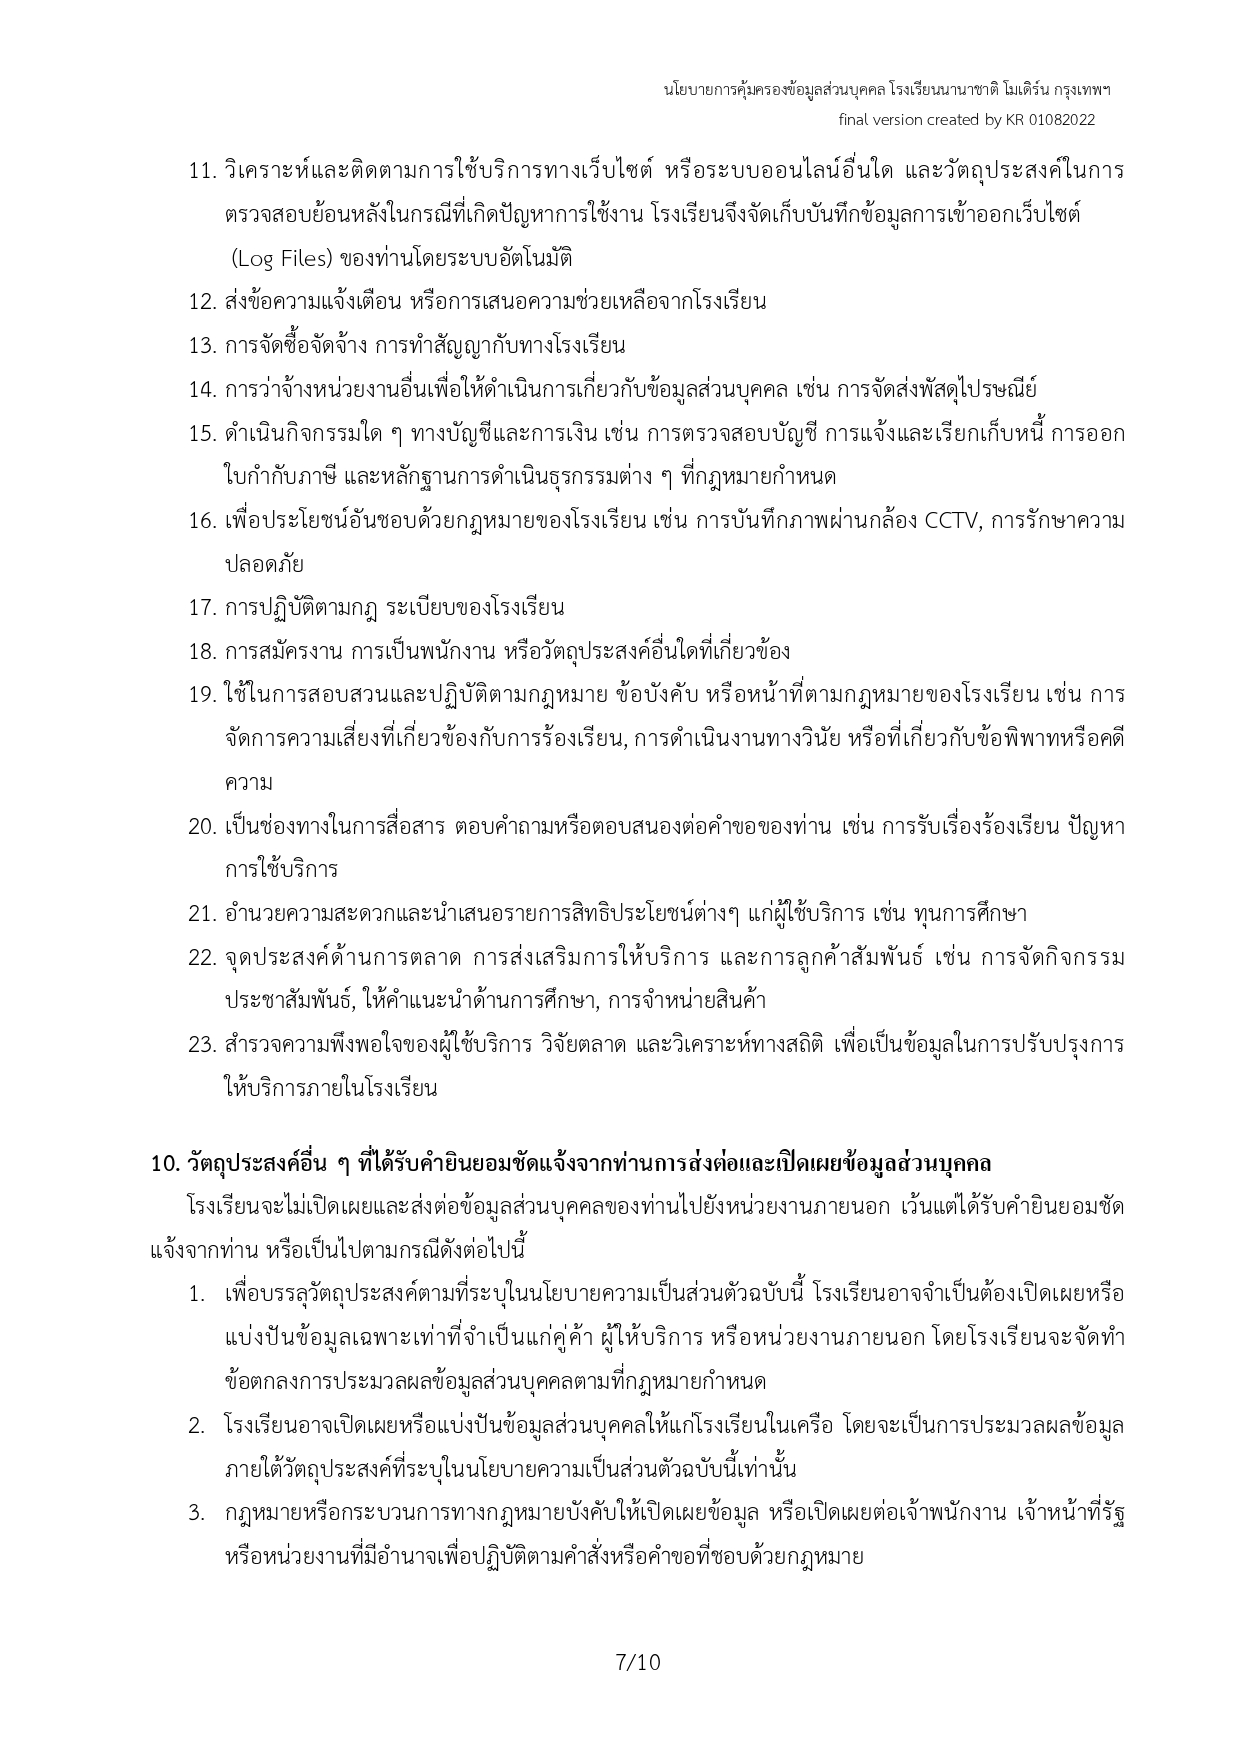 PDPA MISB ภาษาไทย final version 01012566 ไม่ลงชื่อ page 0007